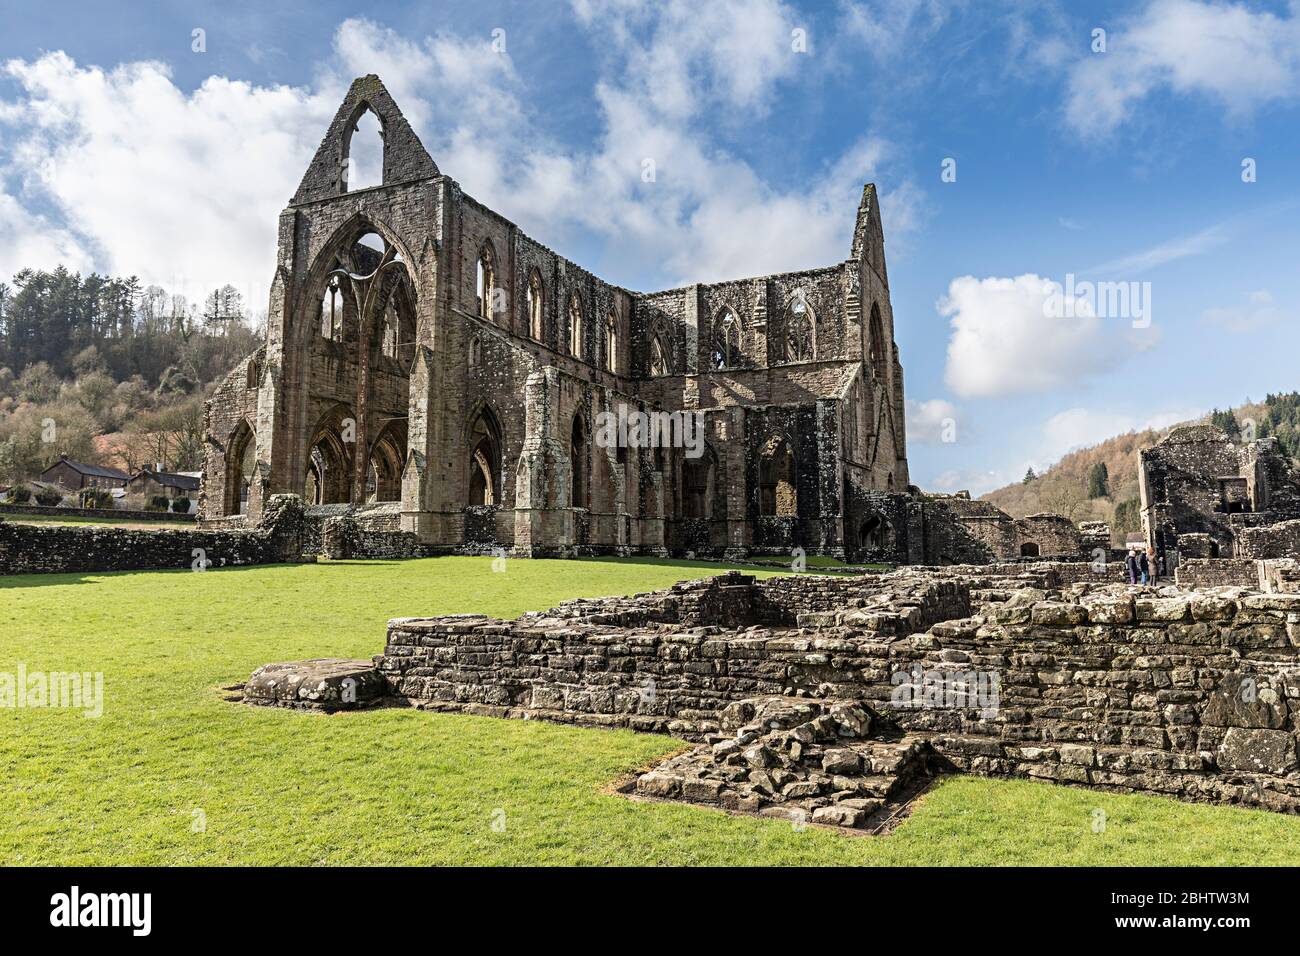 Tintern Abbey, Wales, UK Stockfoto